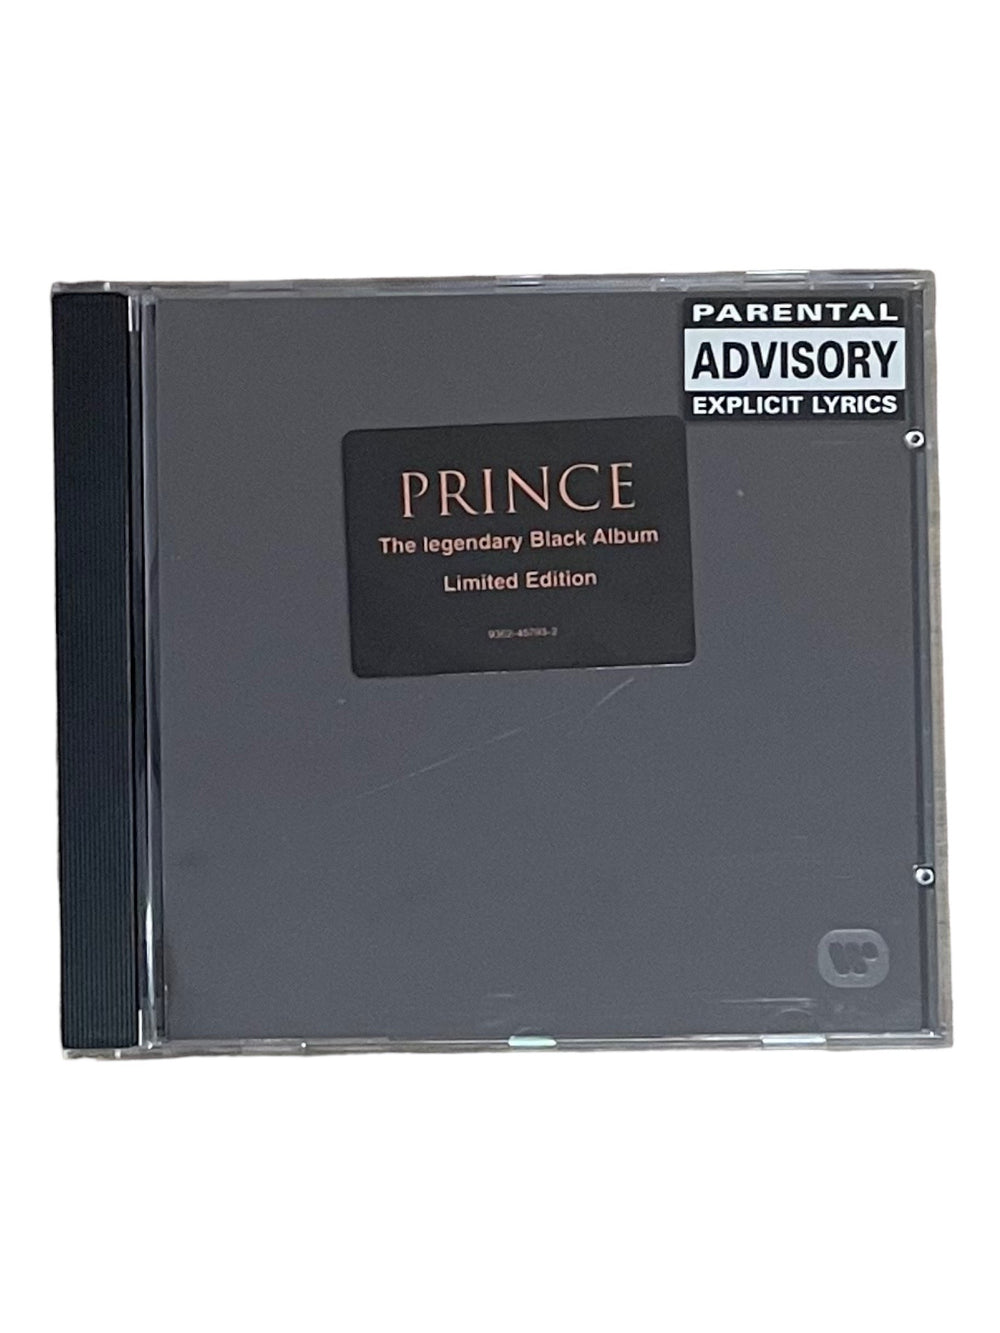 Prince – The Black Album CD Album EU Jewel Case Stickers PA Preloved: 1994